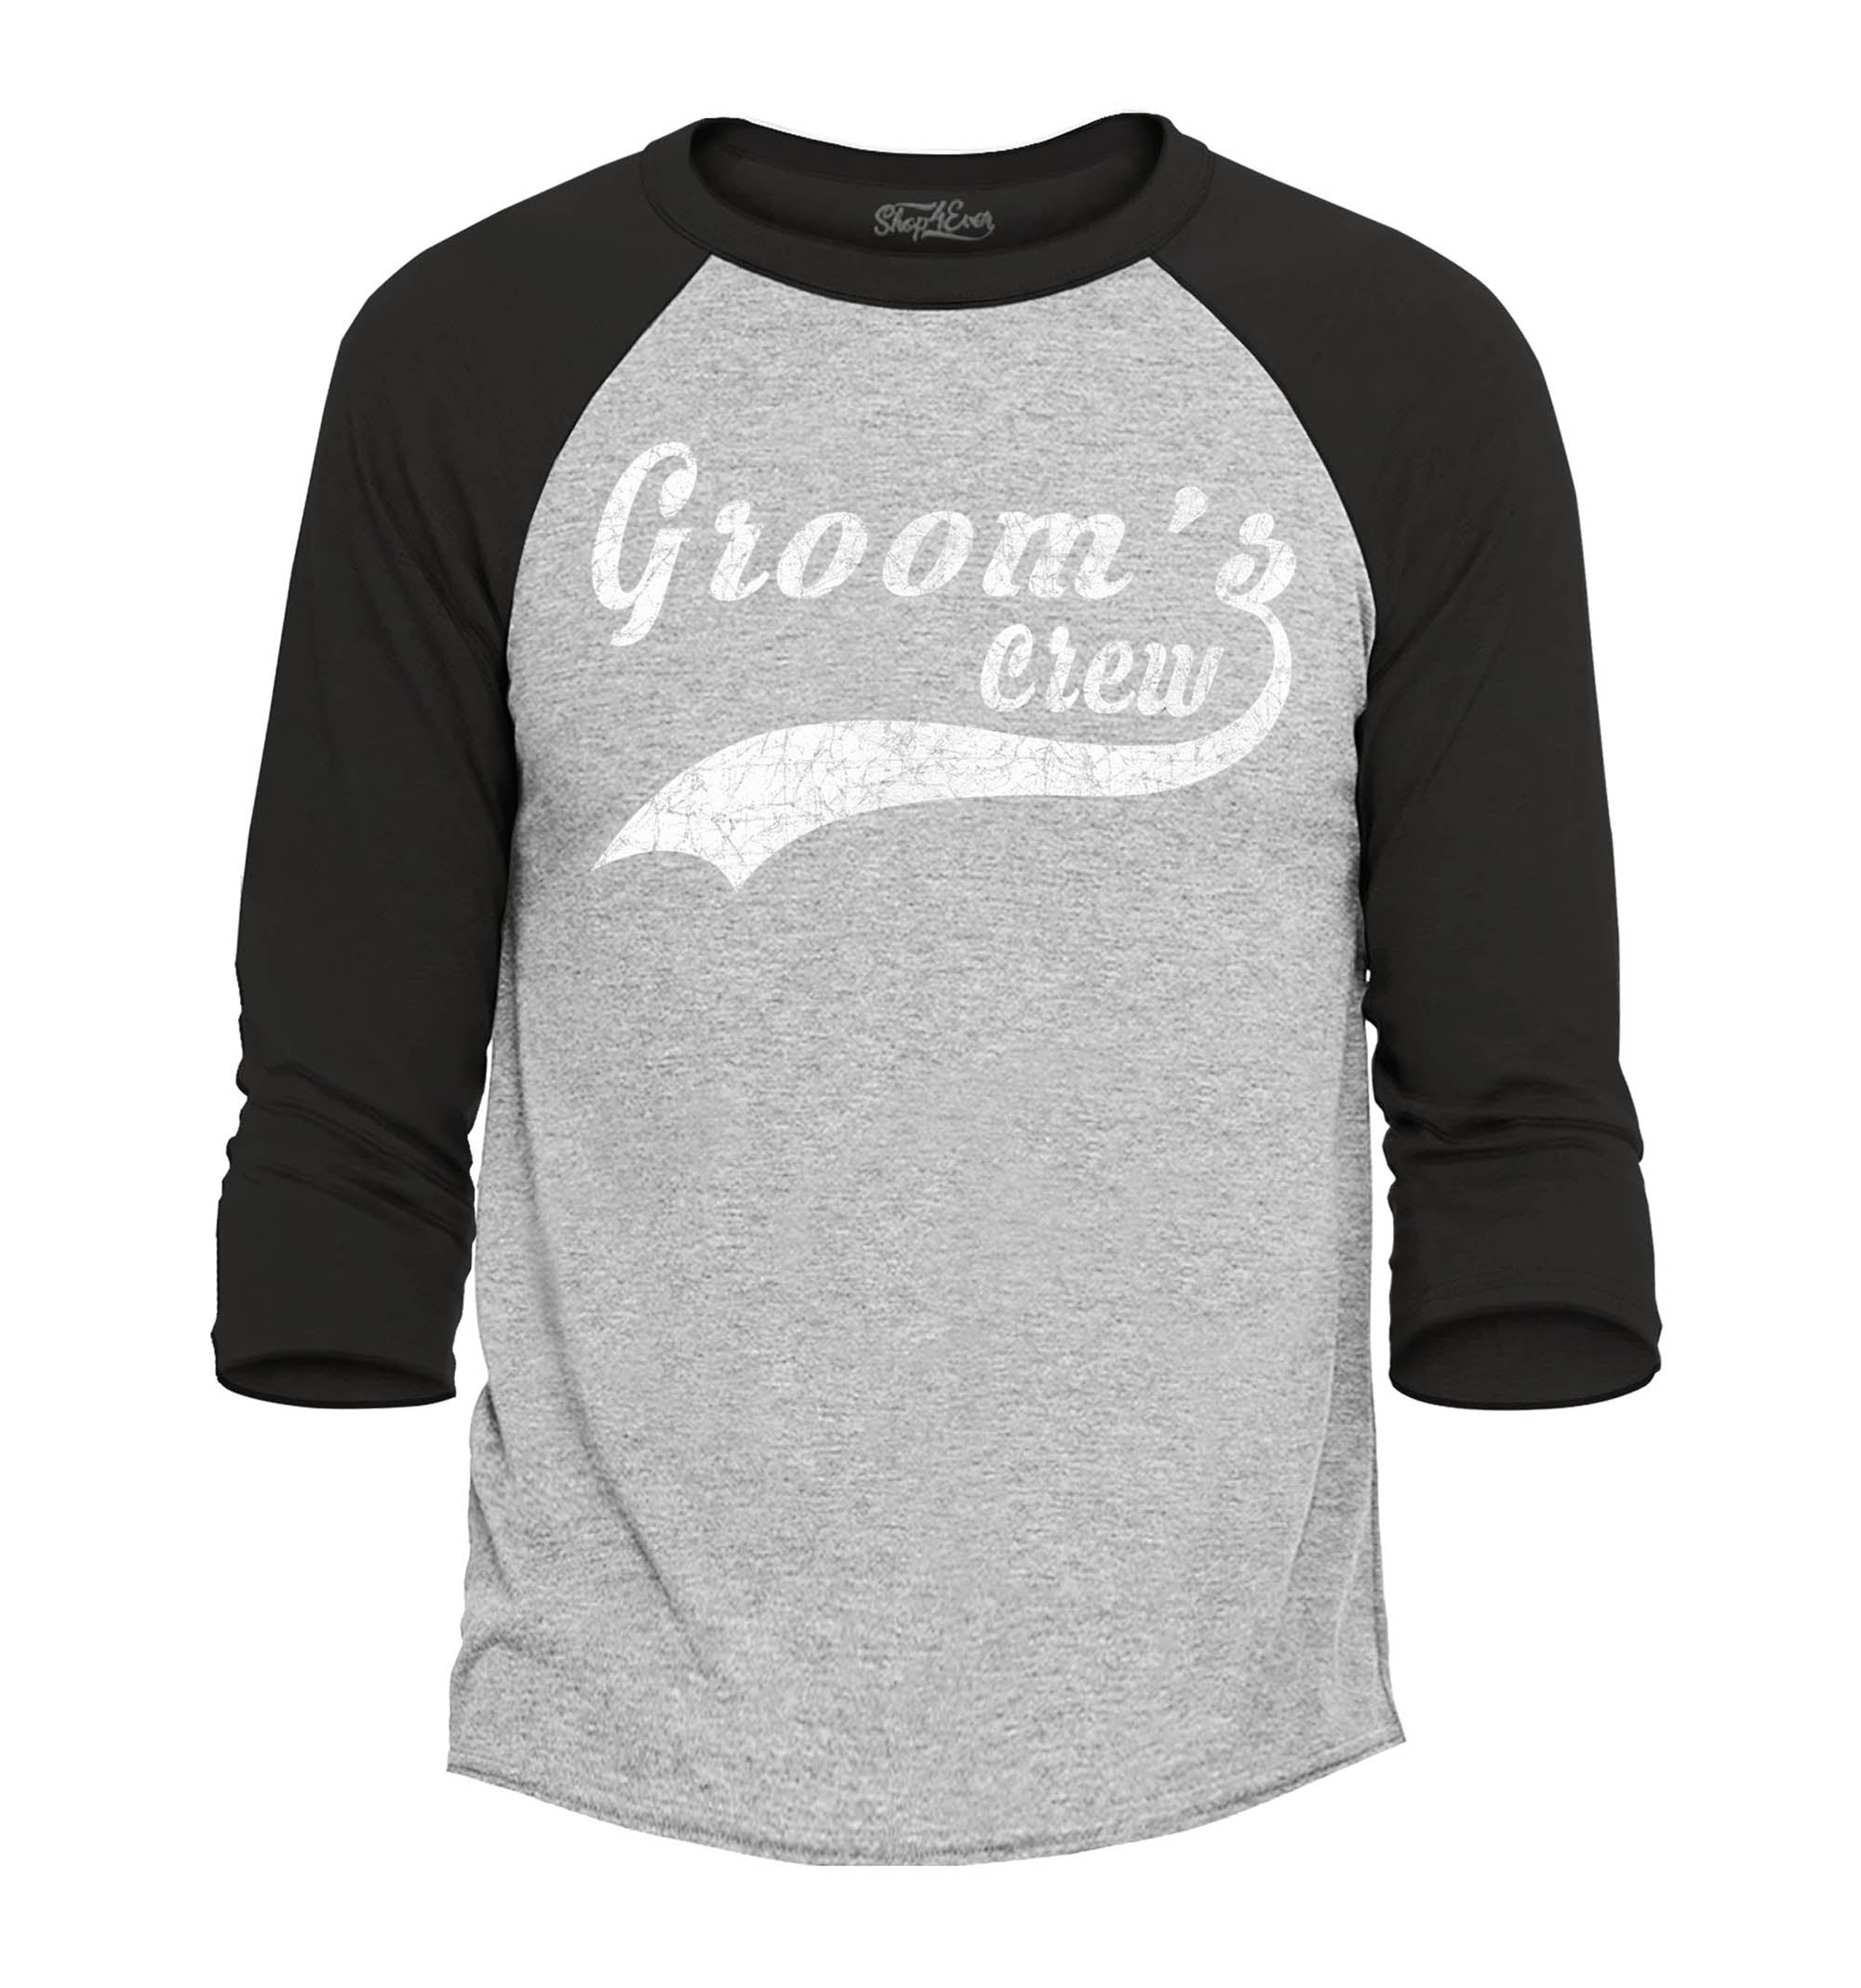 Groom's Crew Distressed Wedding Raglan Baseball Shirt